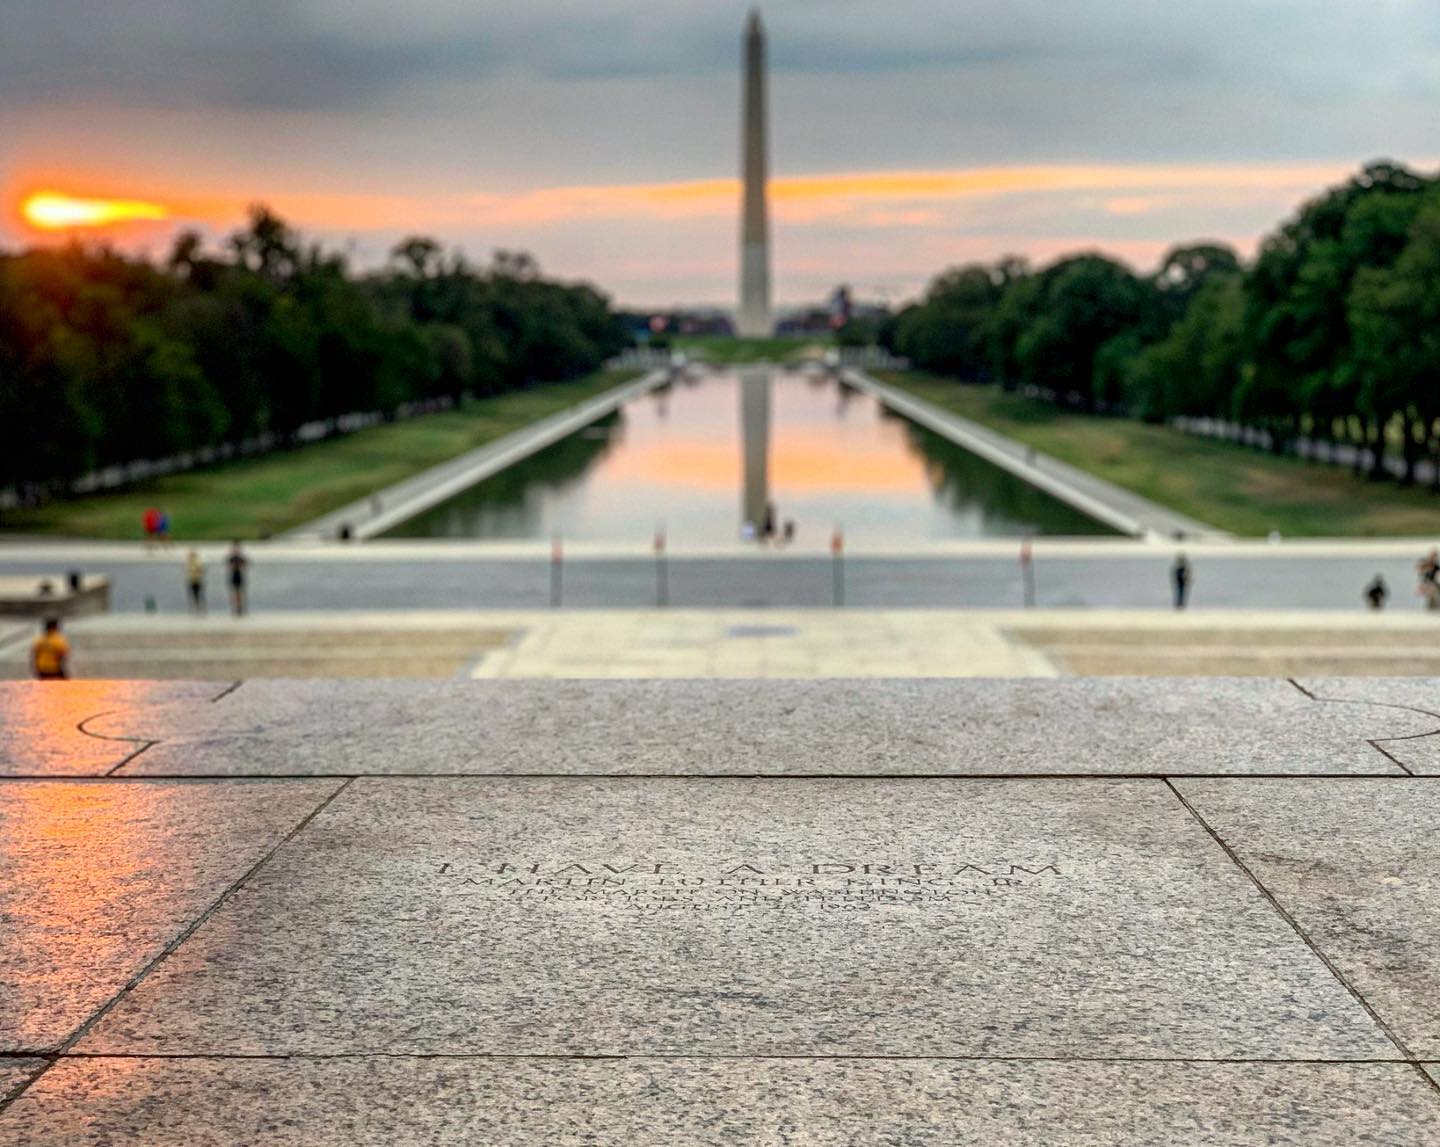 @ jennymagee79 - Lincoln Memorial Steps "J'ai un rêve"